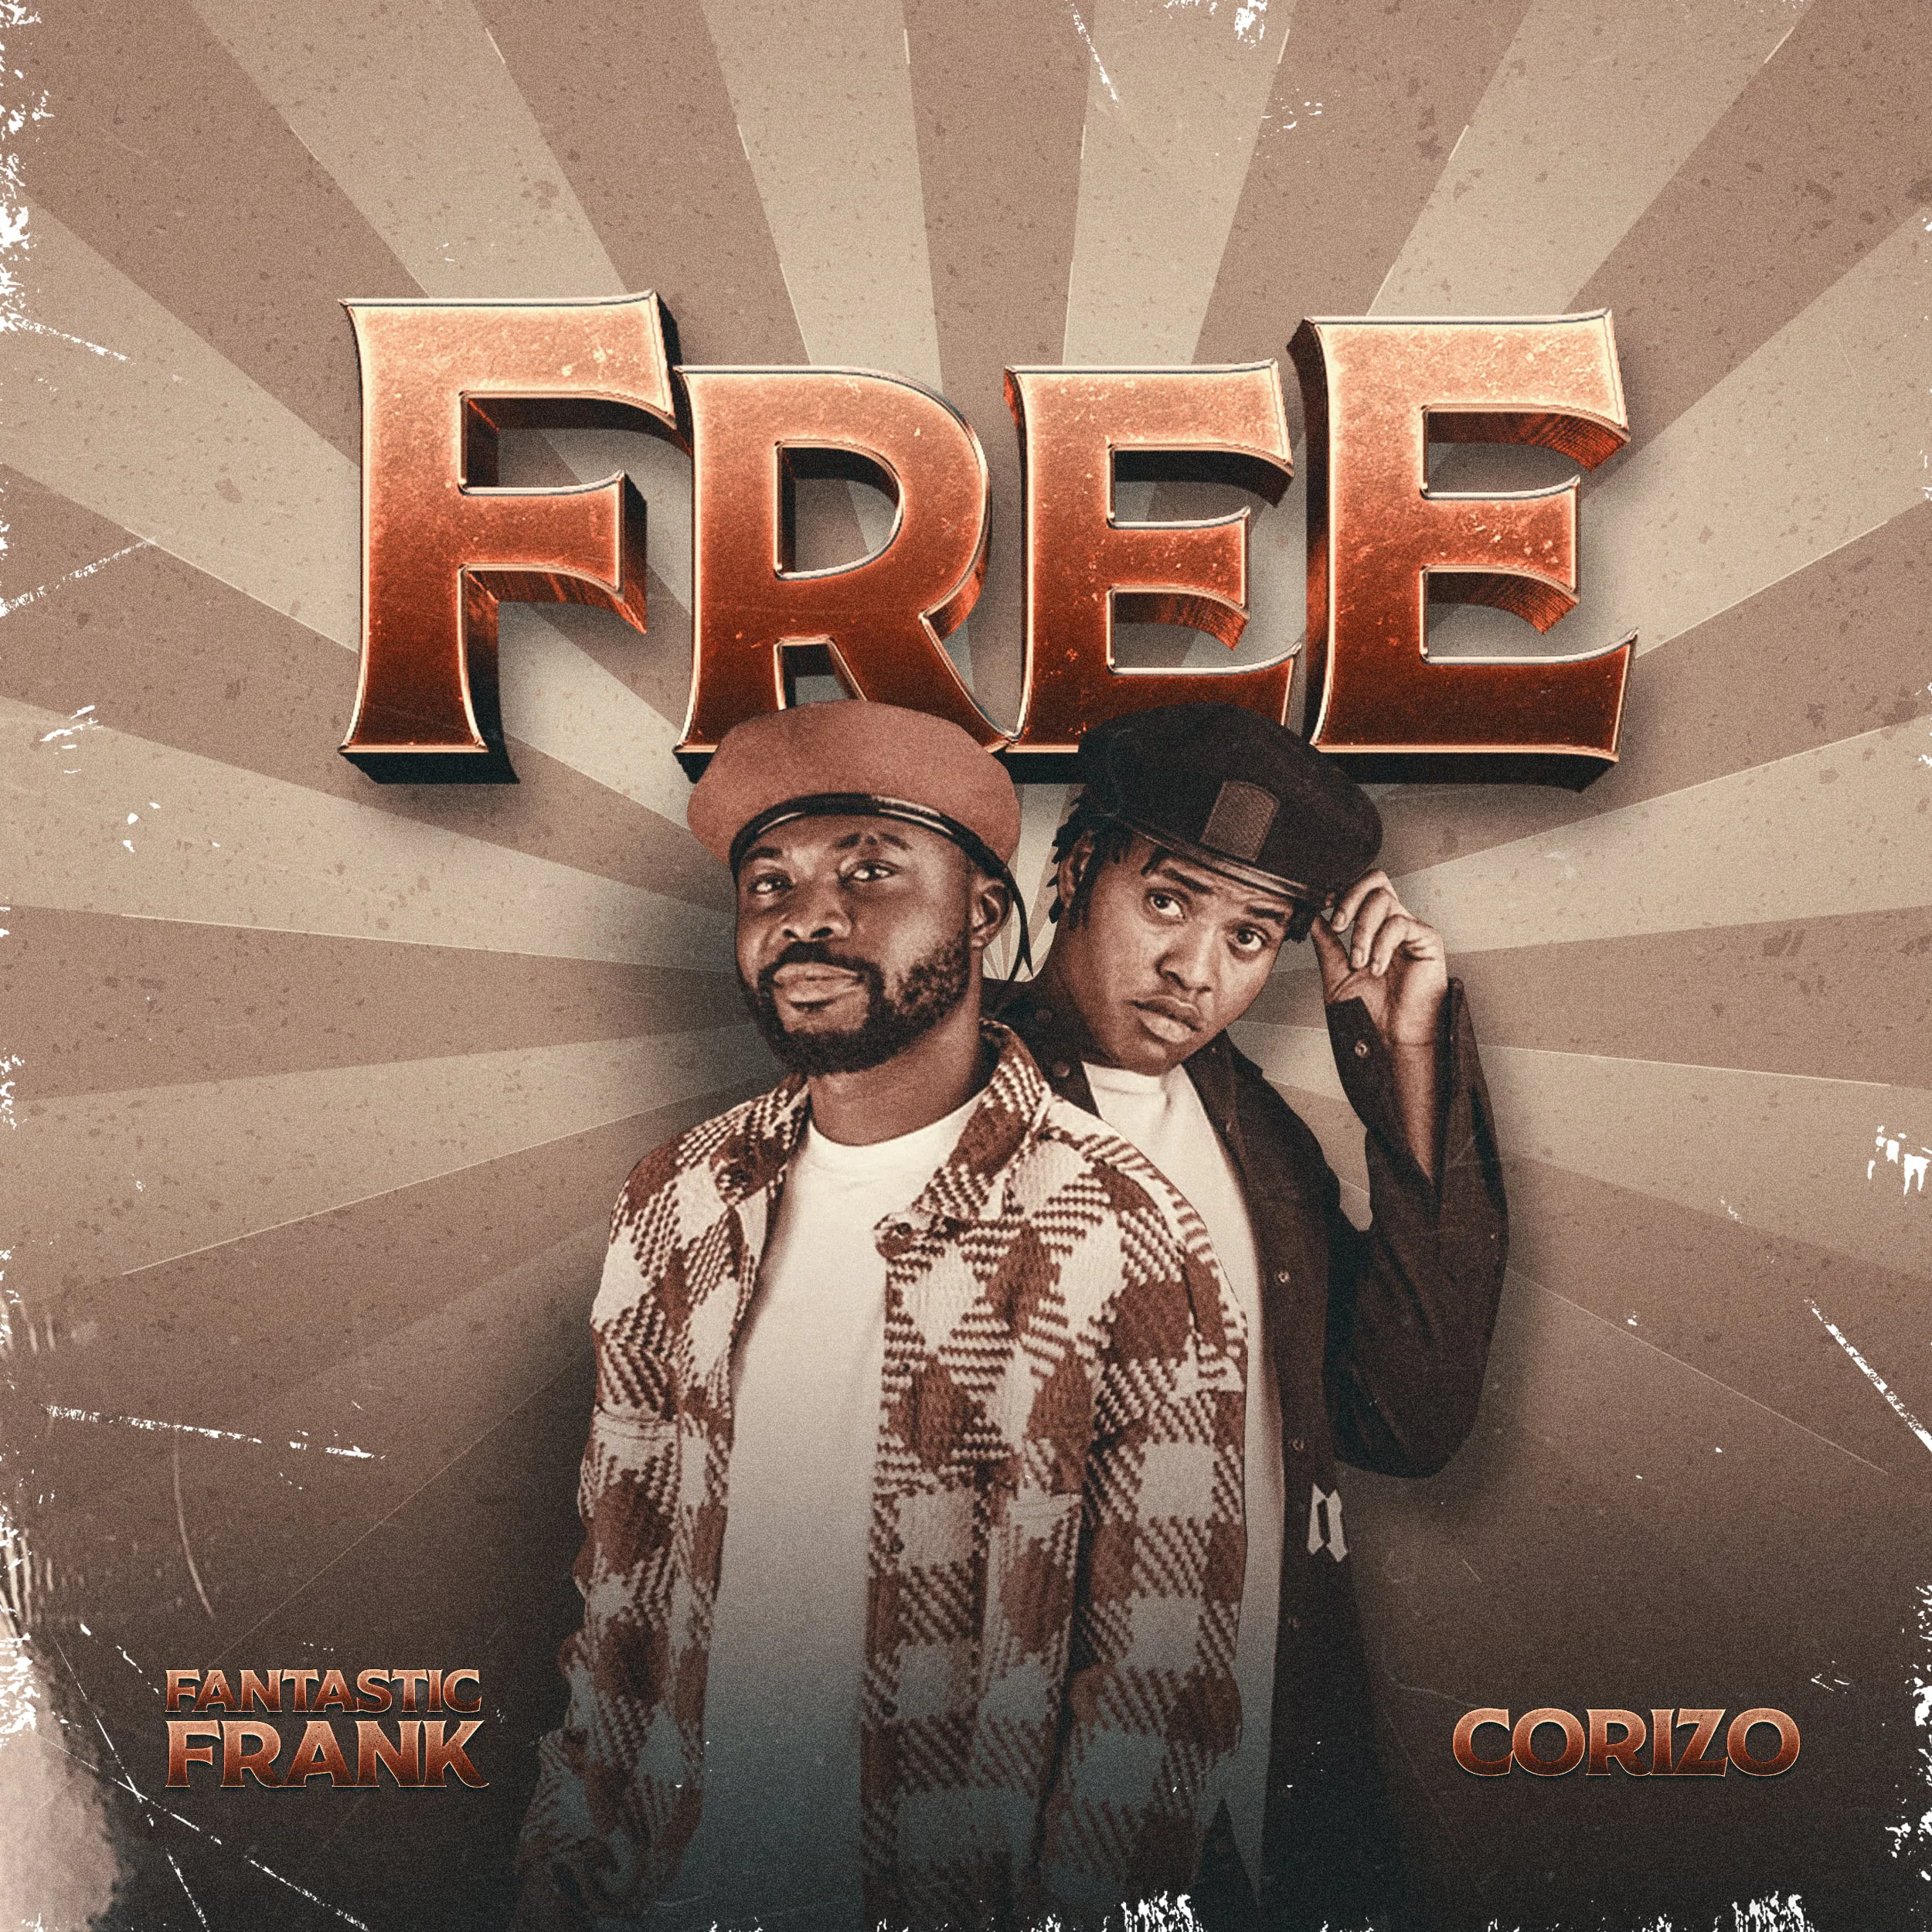 Fantastic Free Feat Corizo (Critic Circle)